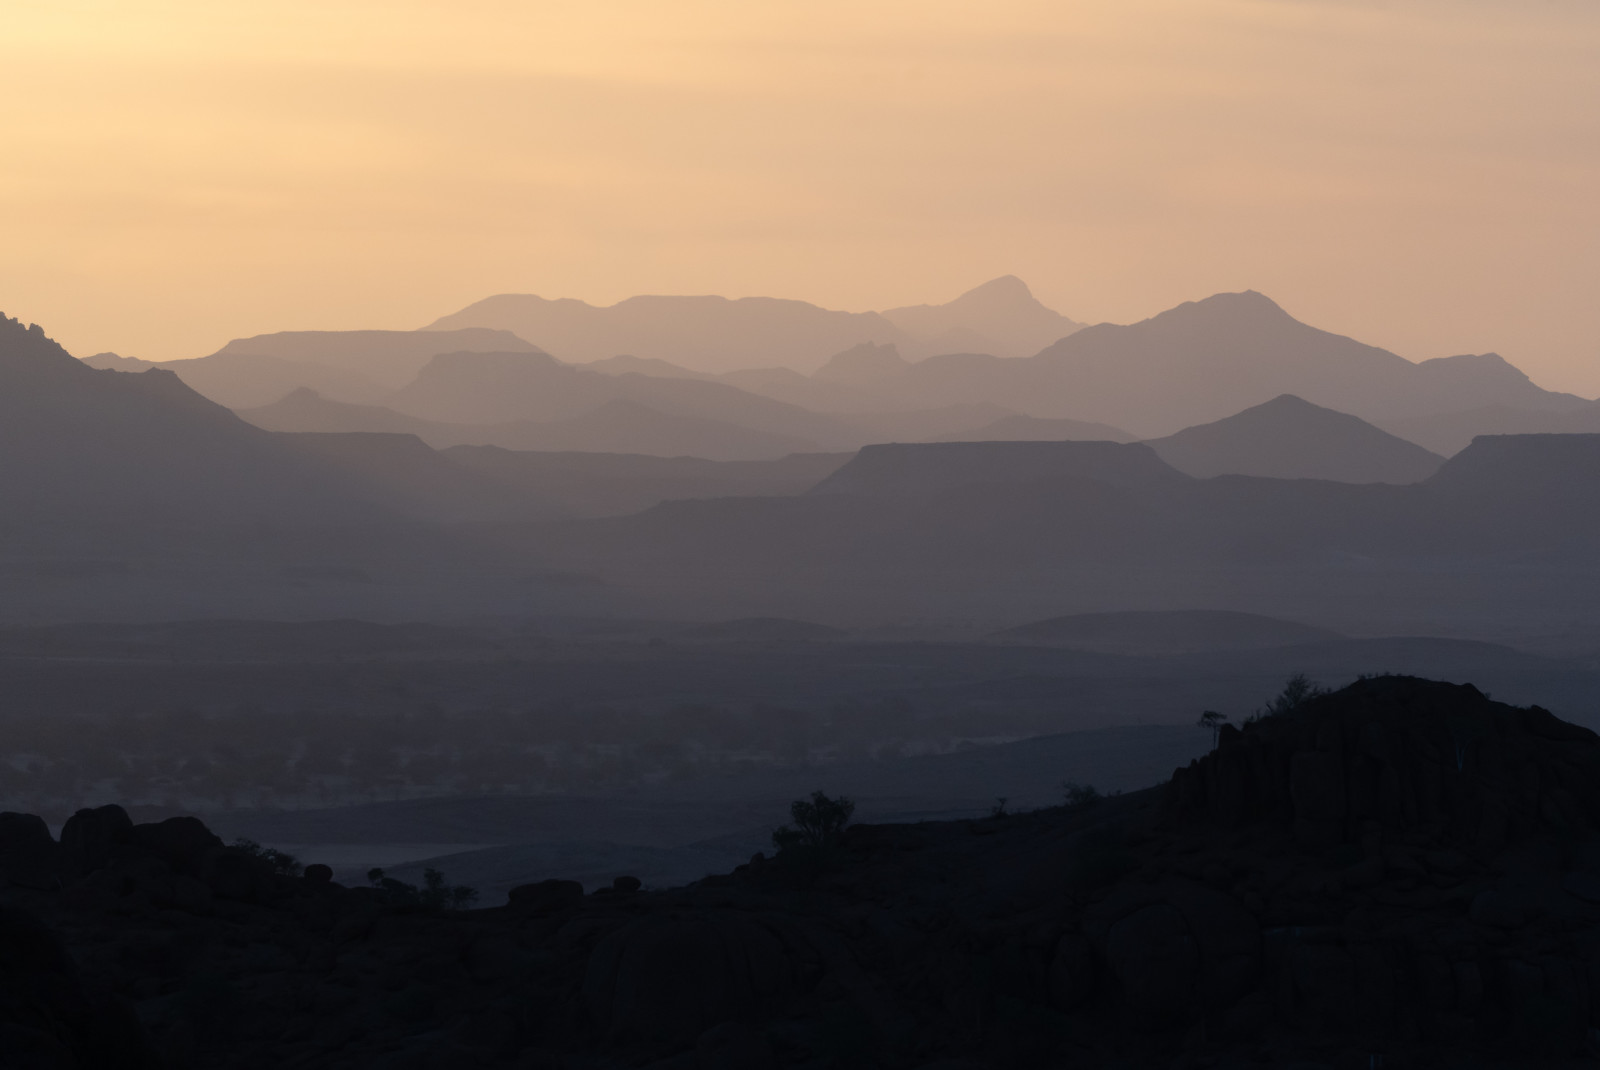 Mountain silhouette in Damaraland in Namibia, Africa